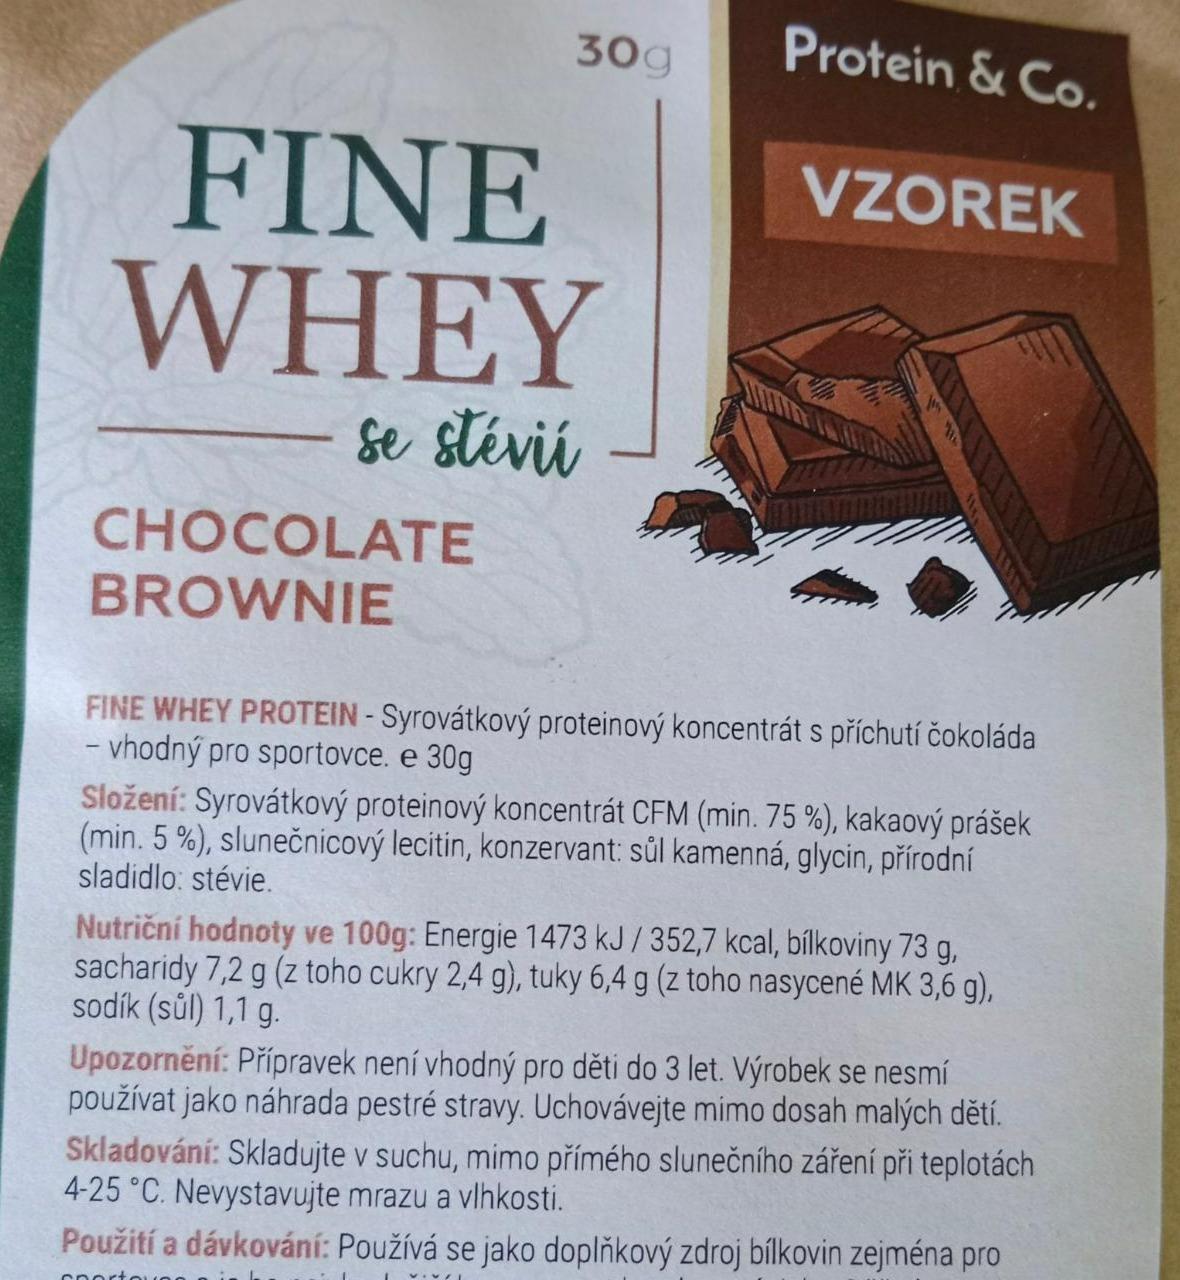 Fotografie - fine Whey se stevii chocolate brownie